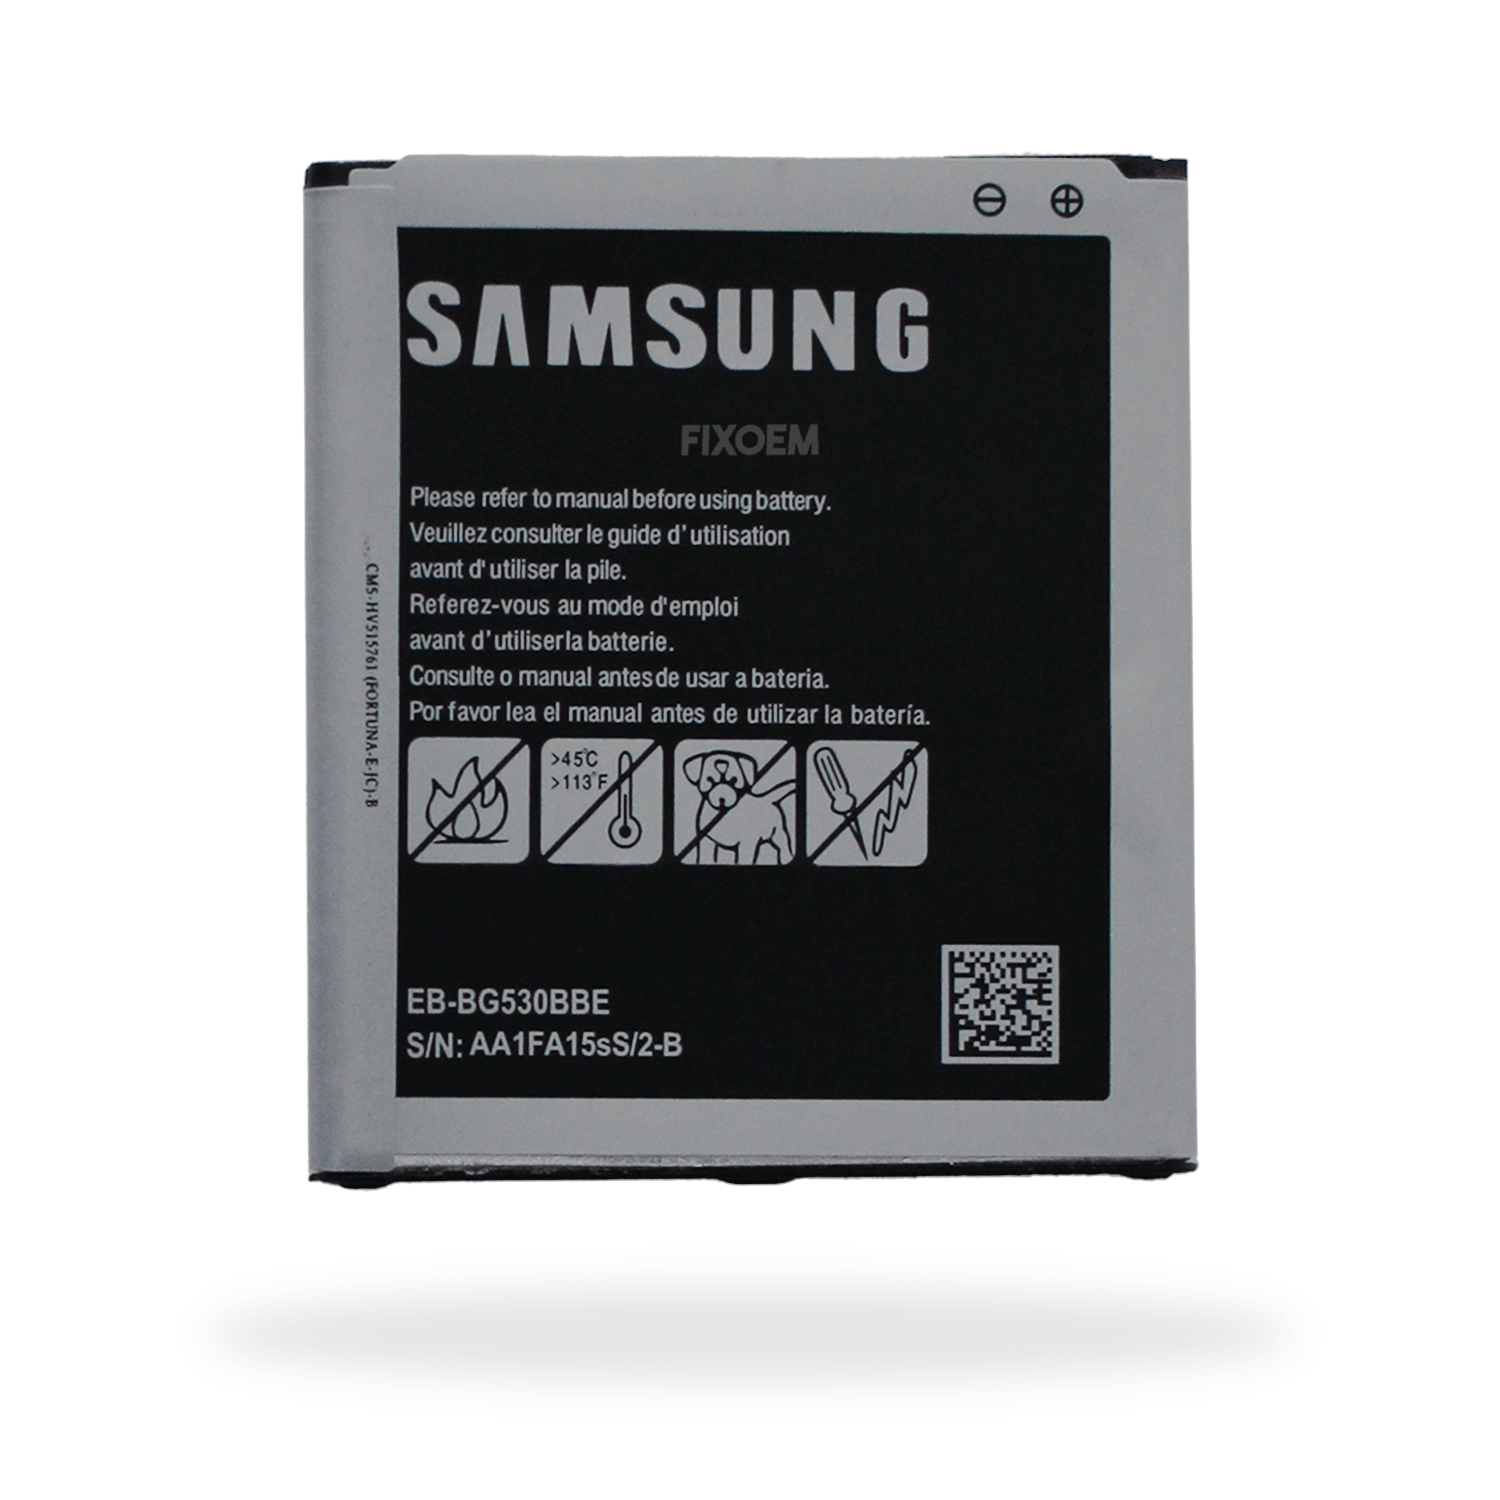 Bateria Samsung Grand Prime /J5 /S4 Sm-G530 Sm-J500M Eb-Bg530Cbe a solo $ 100.00 Refaccion y puestos celulares, refurbish y microelectronica.- FixOEM